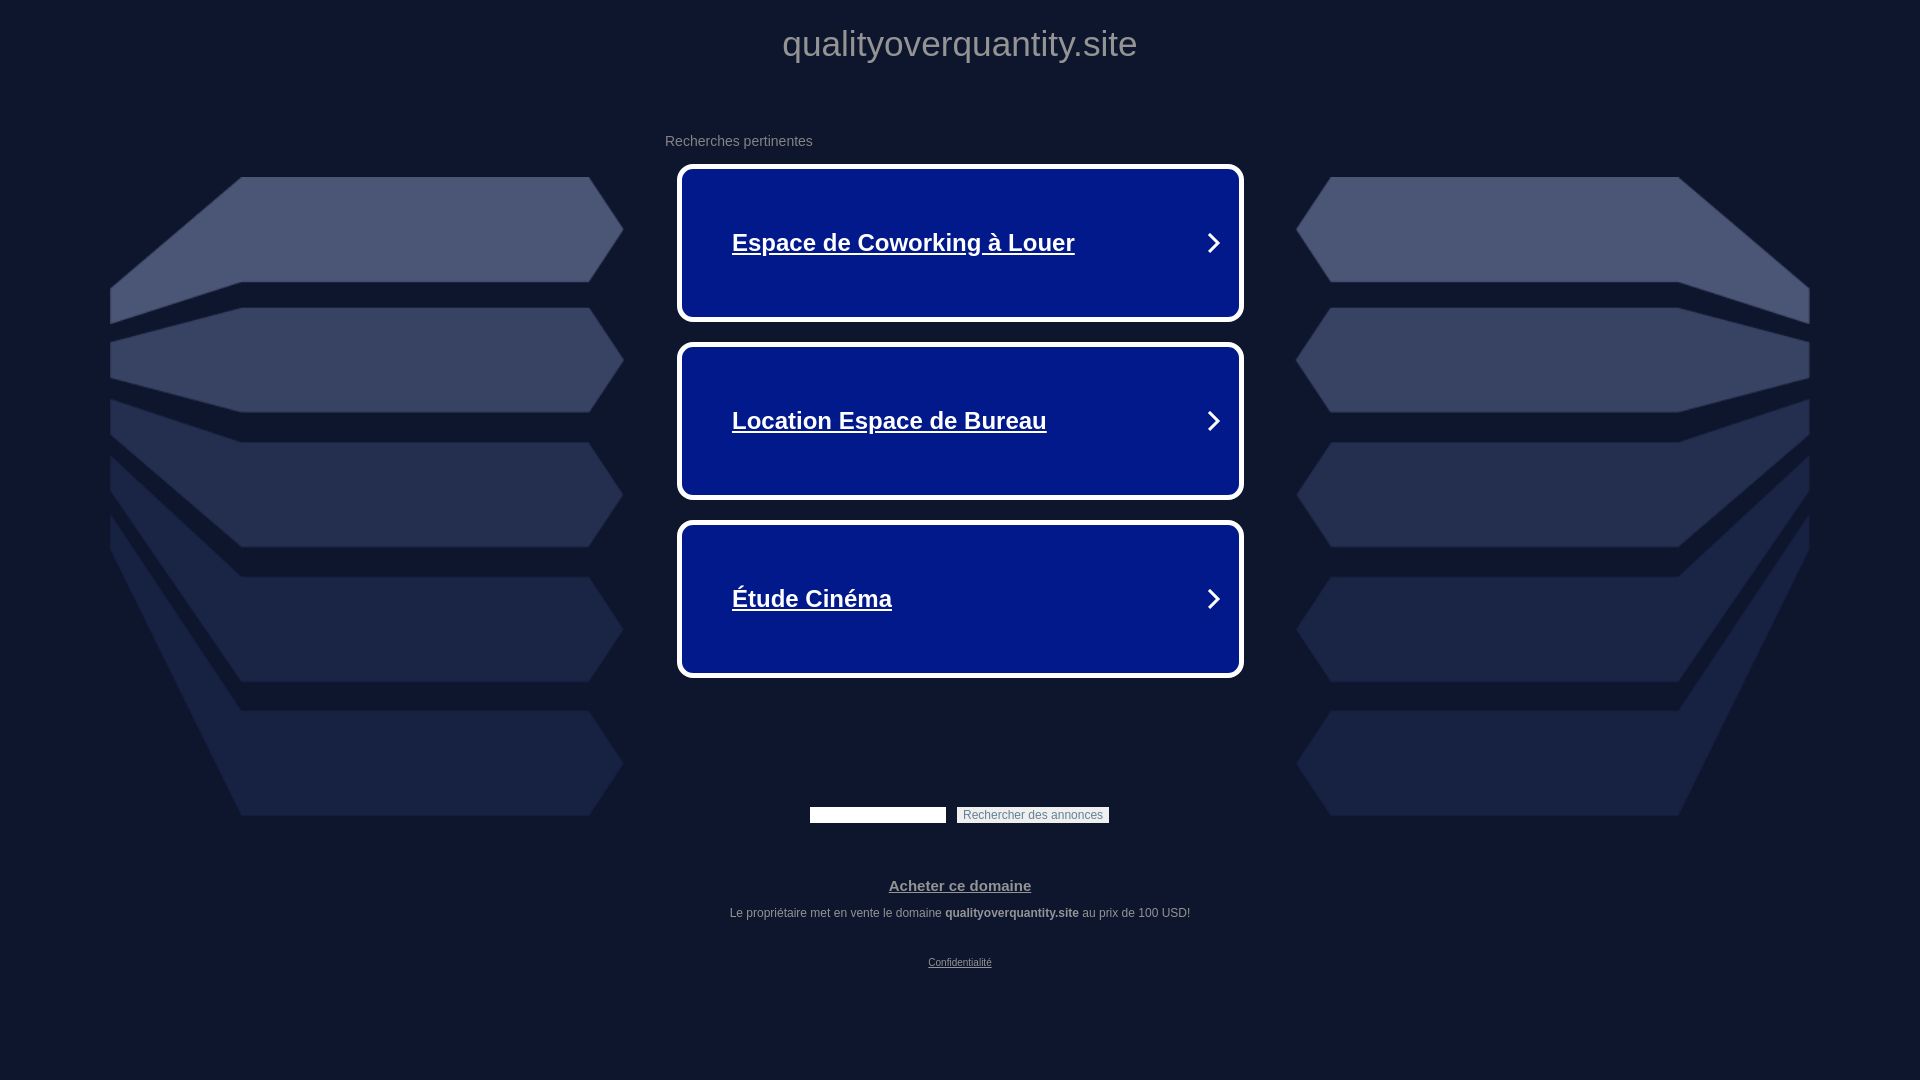 Website status qualityoverquantity.site is   ONLINE